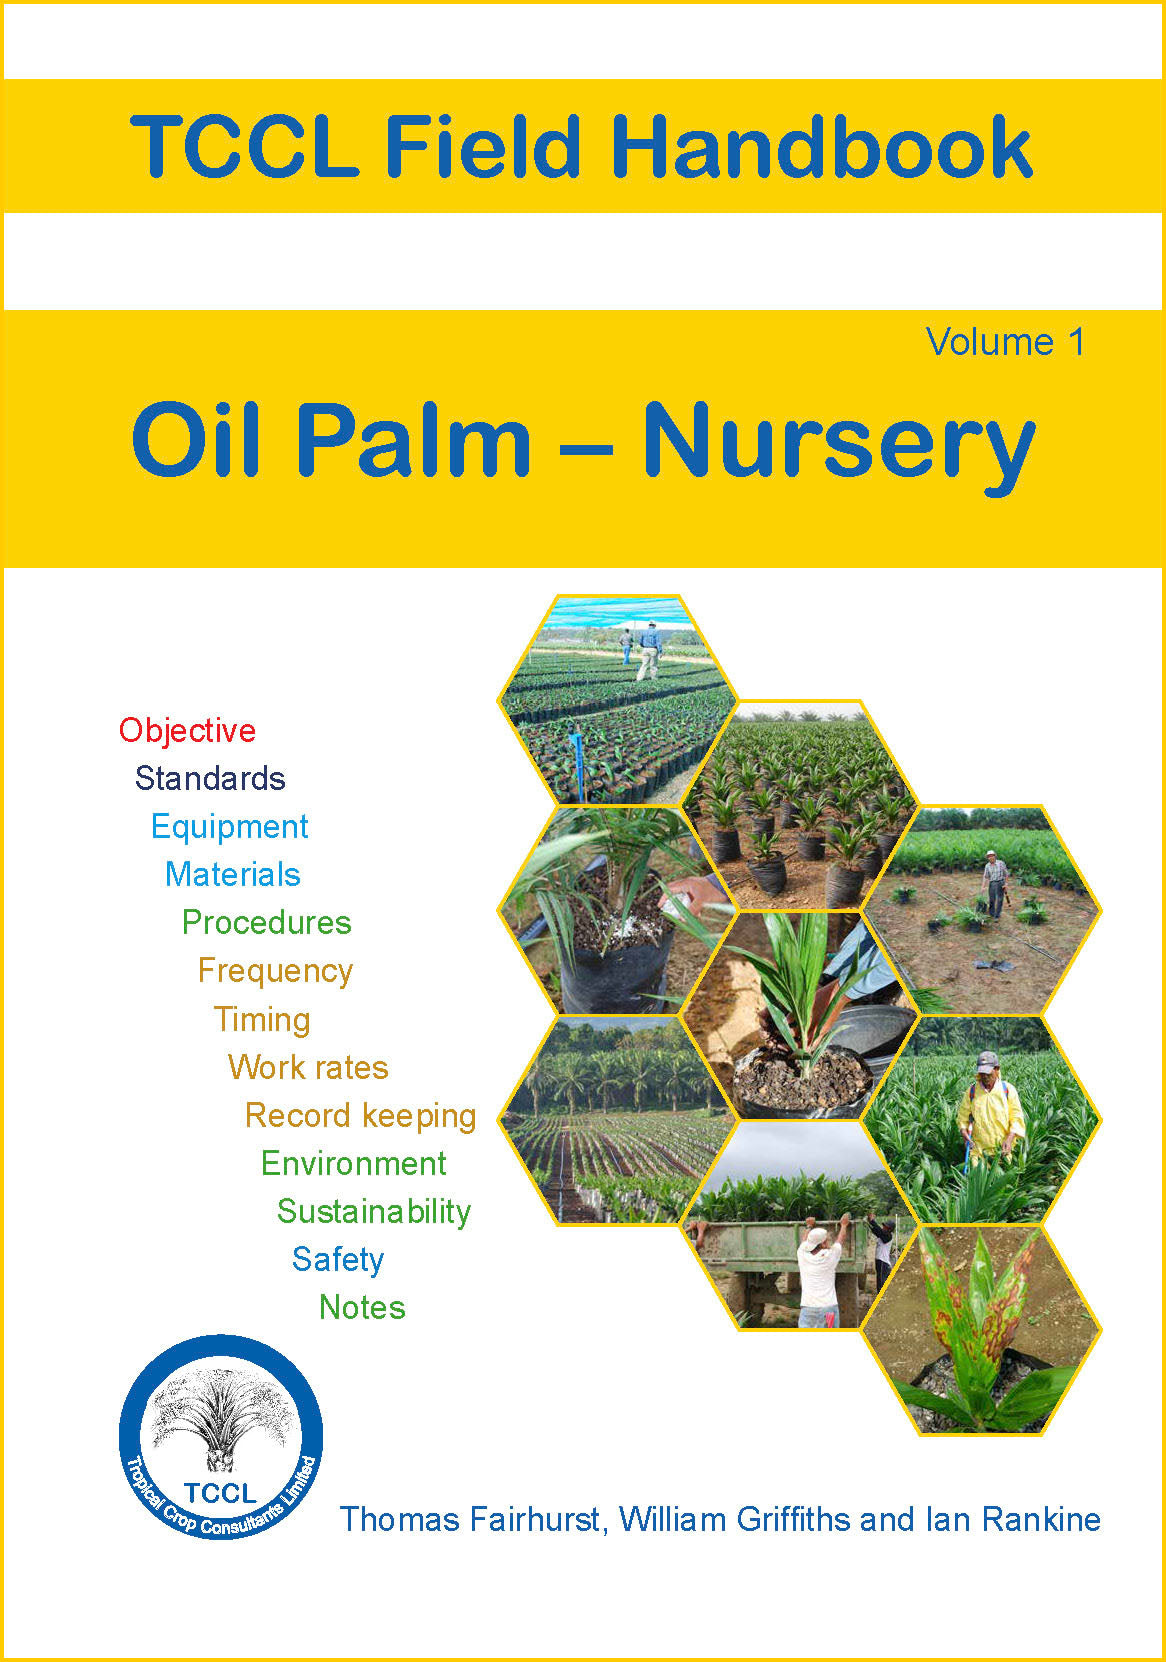 TCCL Oil Palm Handbook - Nursery